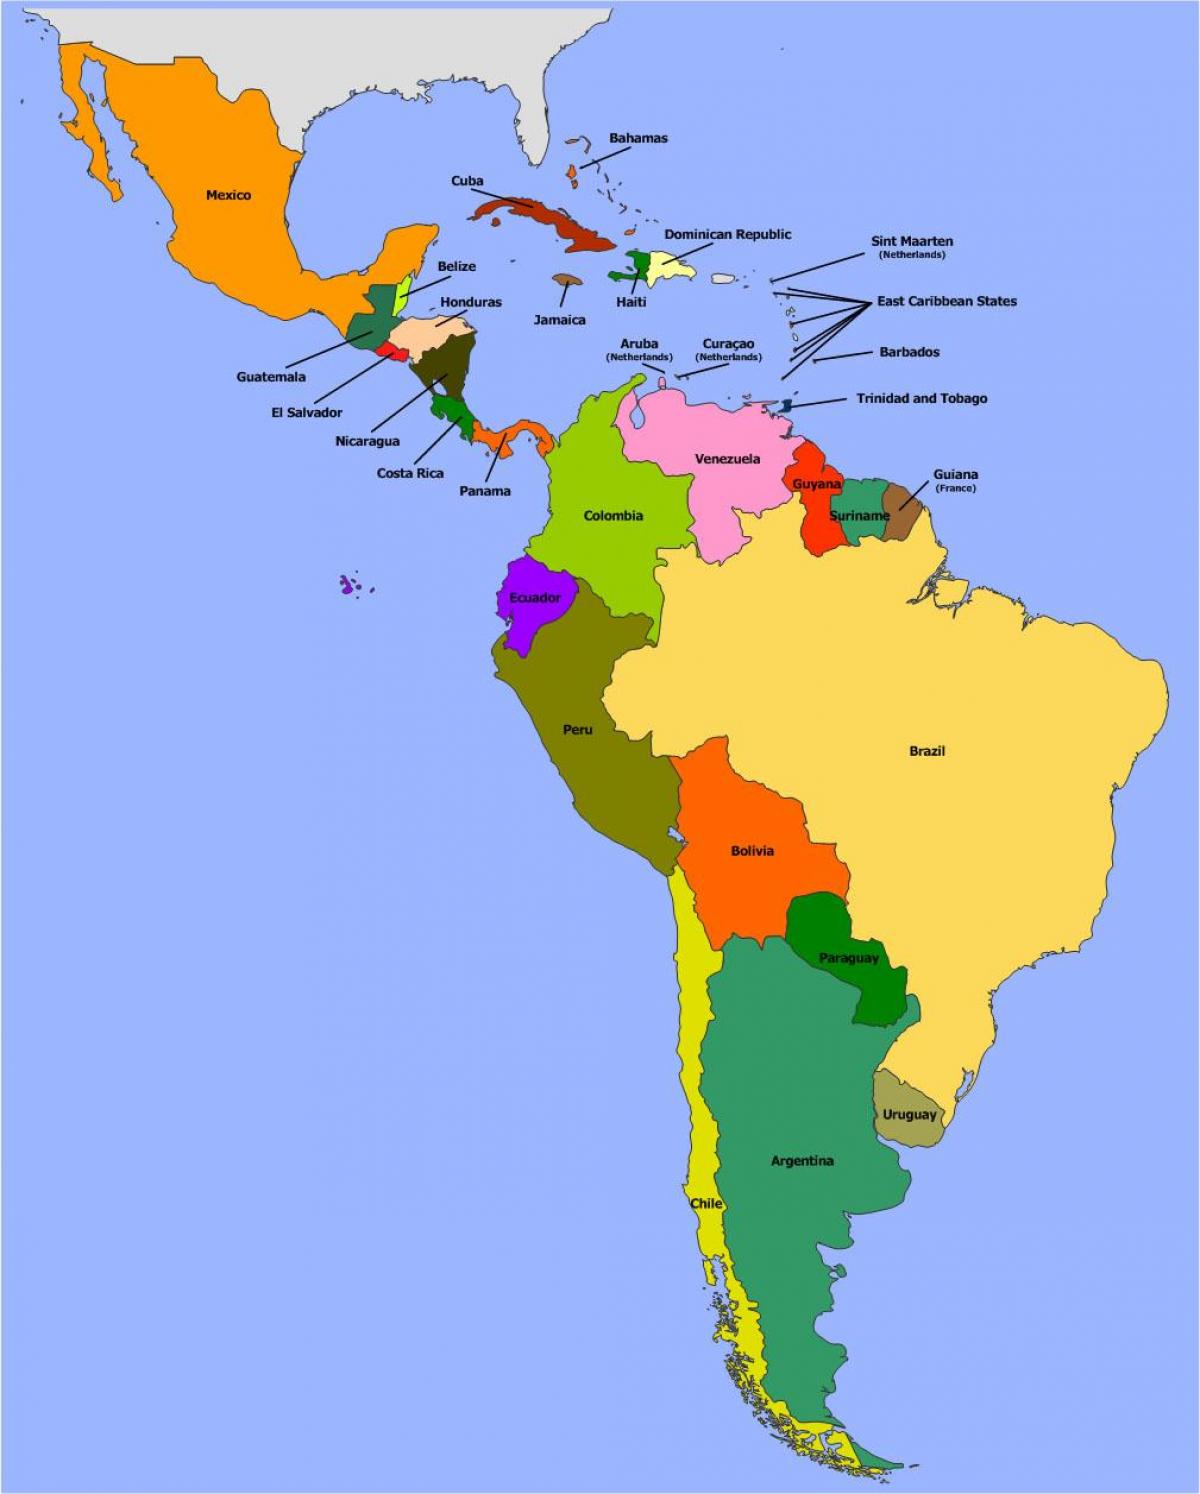 Belize-etelä-amerikka kartta - Kartta Belize etelä-amerikkaan (Keski- Amerikka - Amerikka)